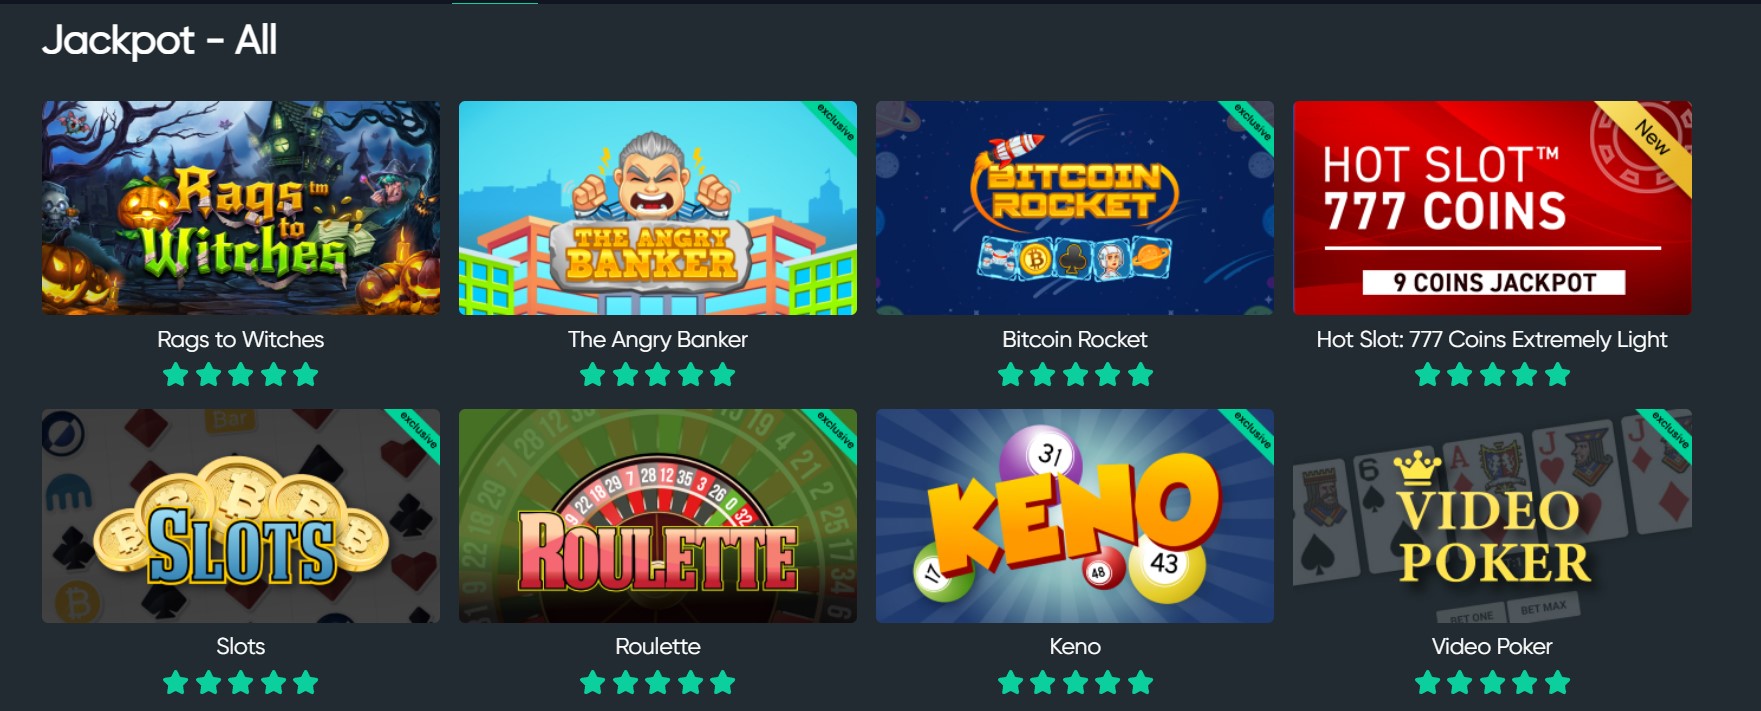 jackpot games bitcoin.com